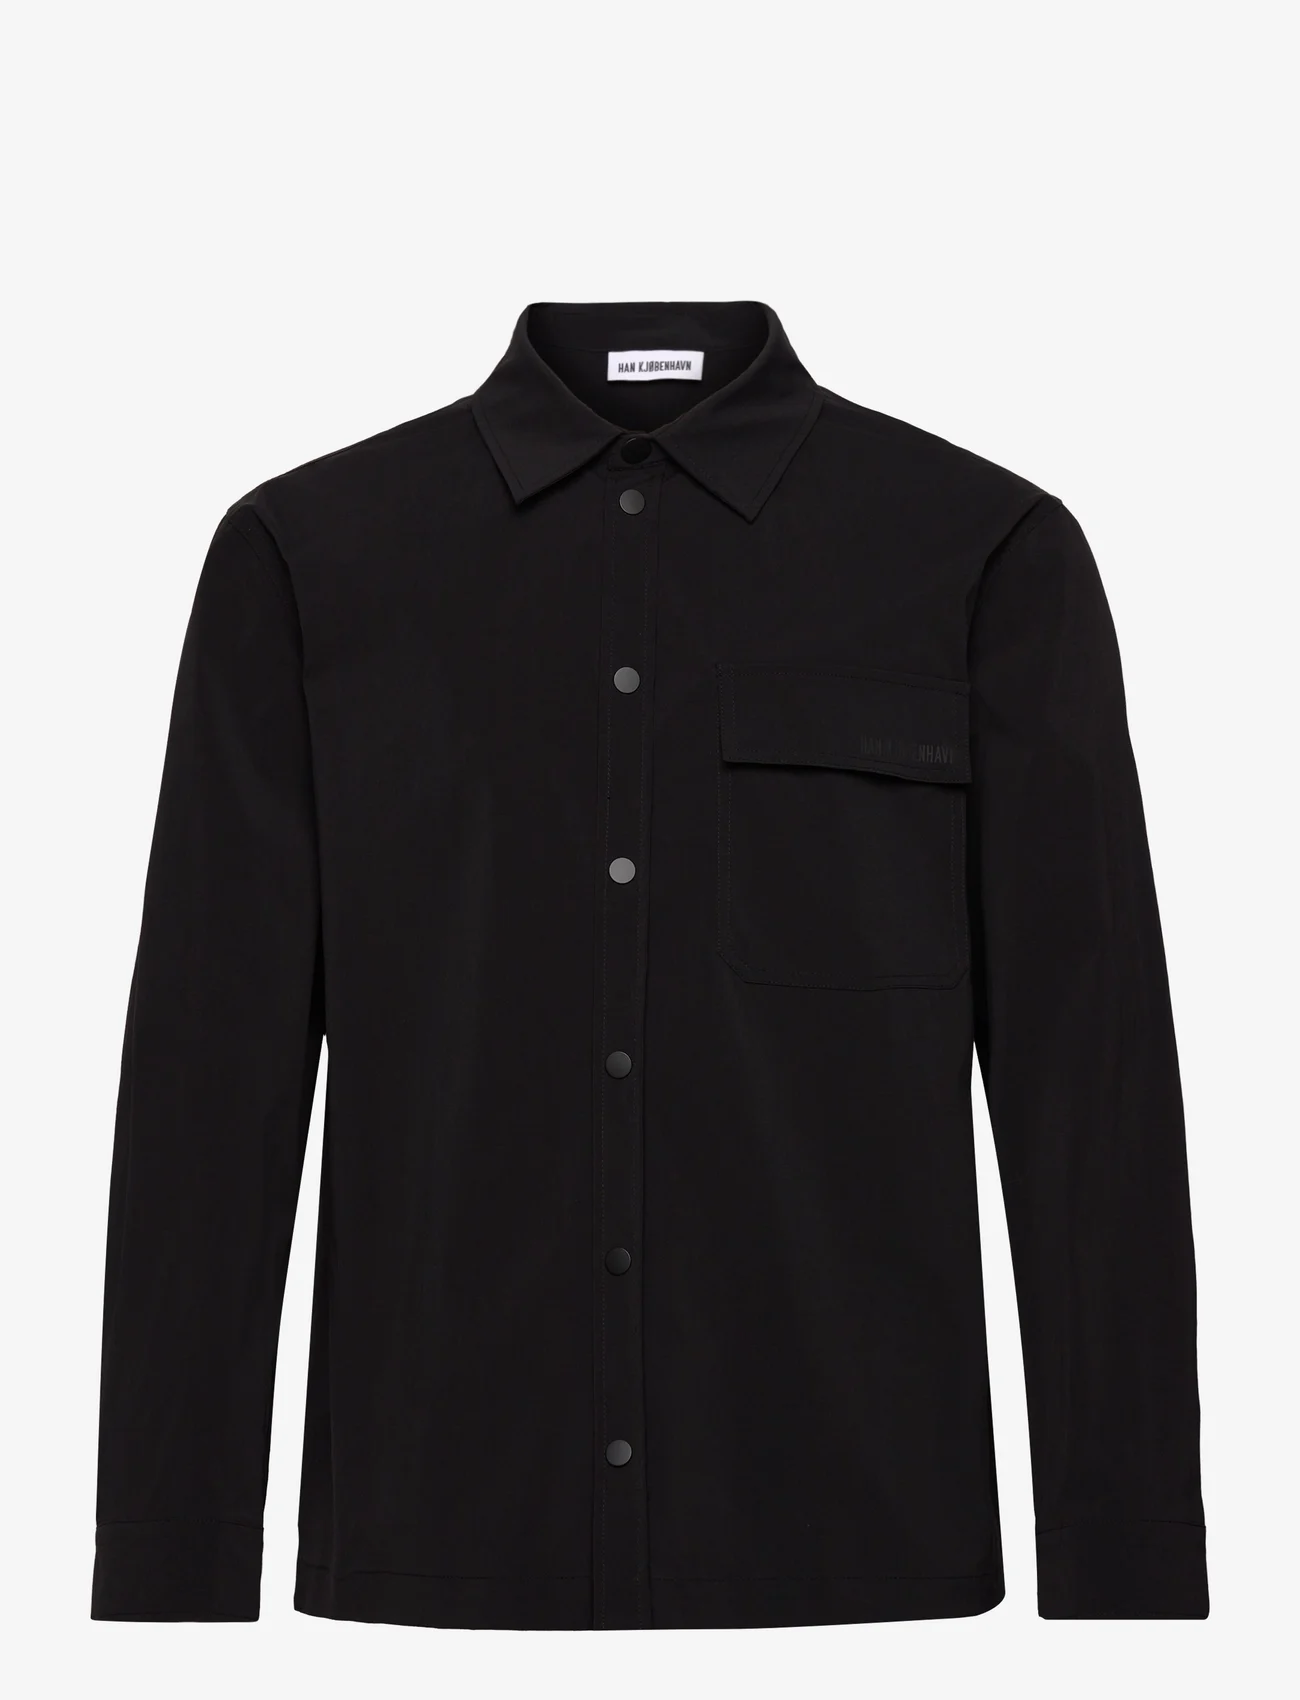 HAN Kjøbenhavn - Nylon Patch Pocket Shirt Long Sleeve - män - black - 0